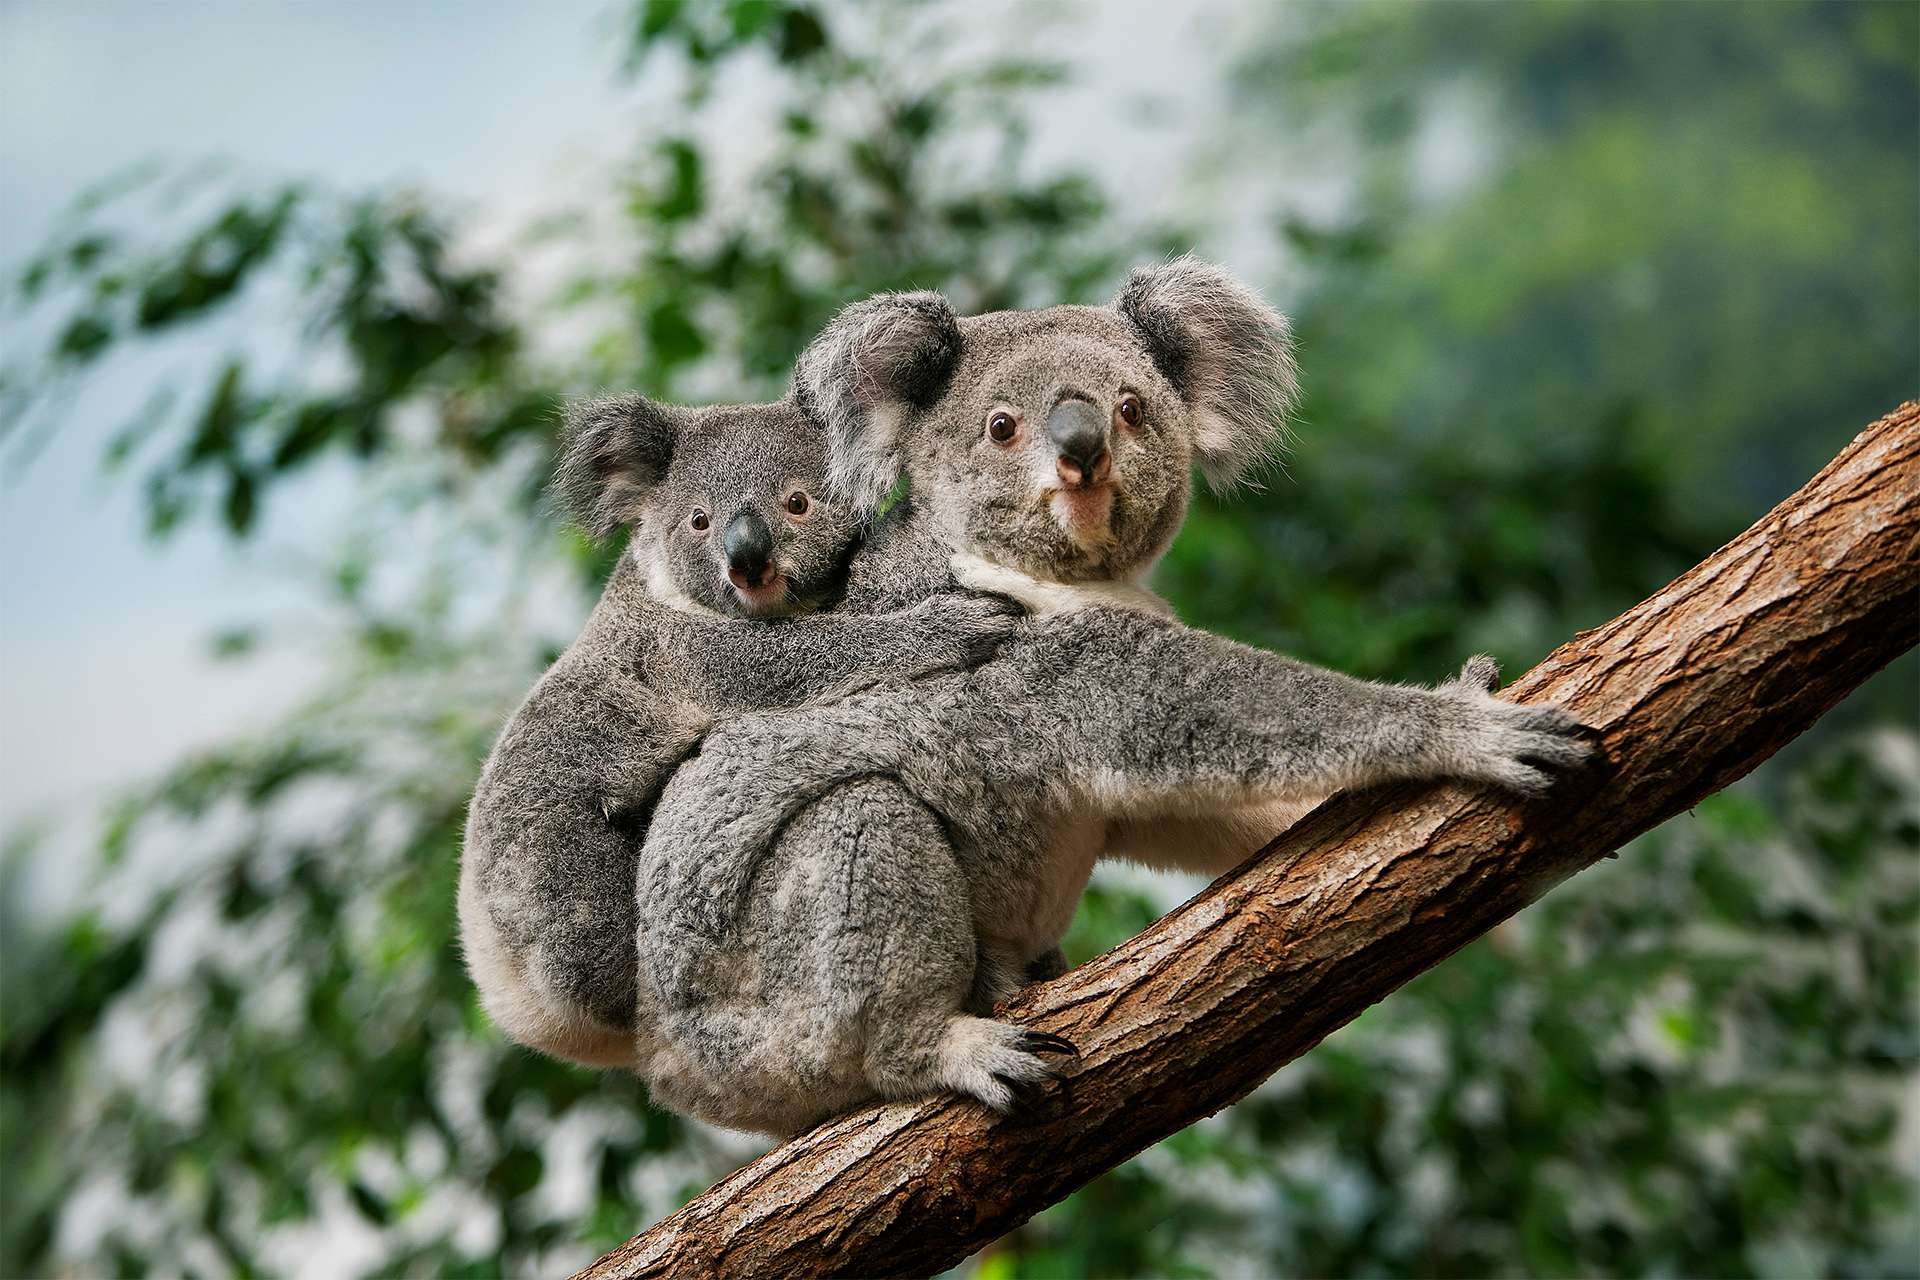 Koala, phascolarctos cinereus, Female carrying Young on its Back Australia wildlife conservation travel Australian bushfires